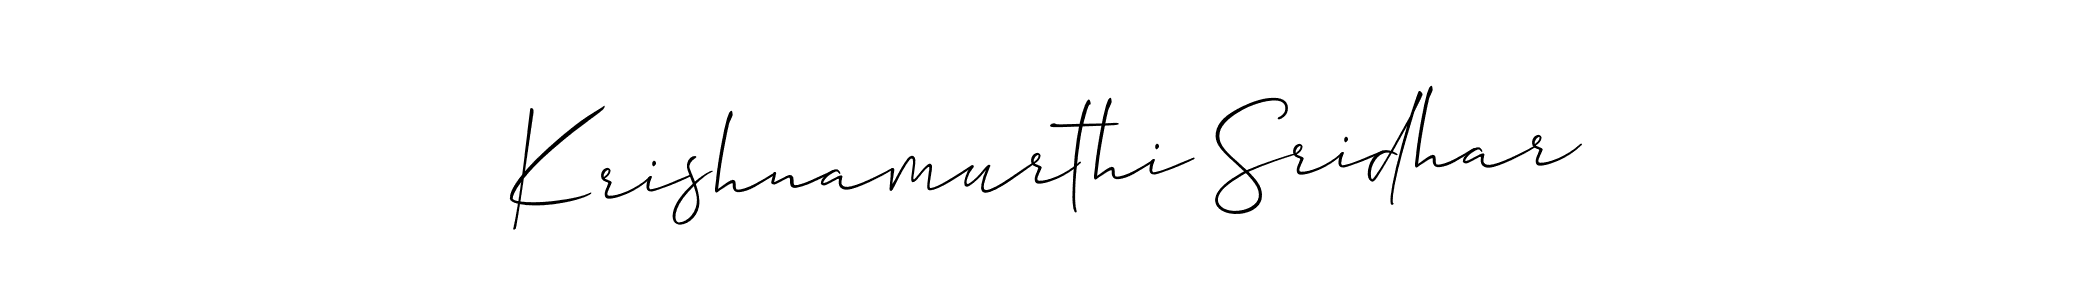 How to Draw Krishnamurthi Sridhar signature style? Allison_Script is a latest design signature styles for name Krishnamurthi Sridhar. Krishnamurthi Sridhar signature style 2 images and pictures png